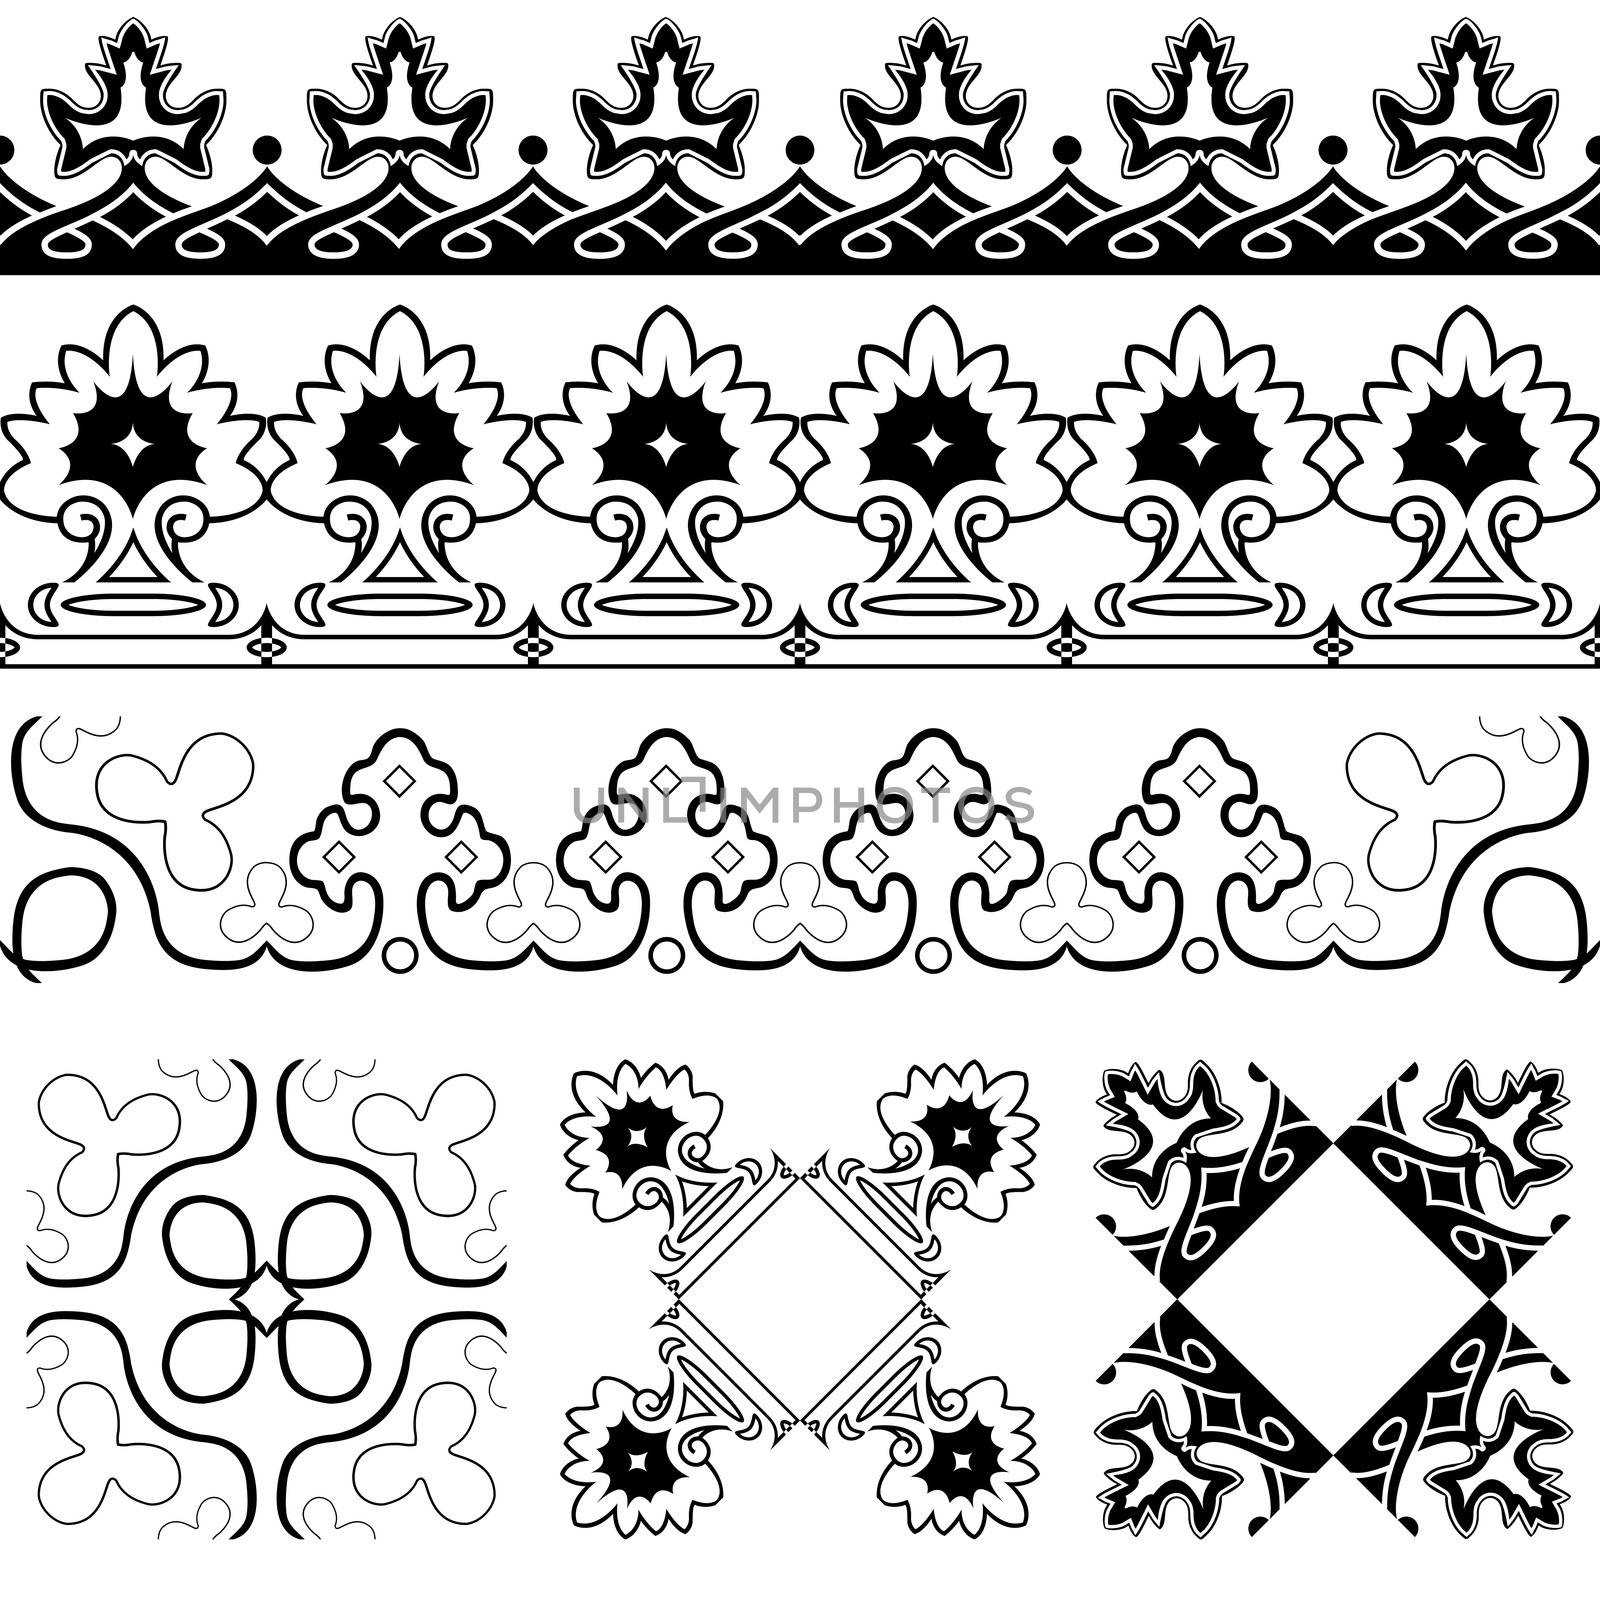 symmetrical design elements by robertosch